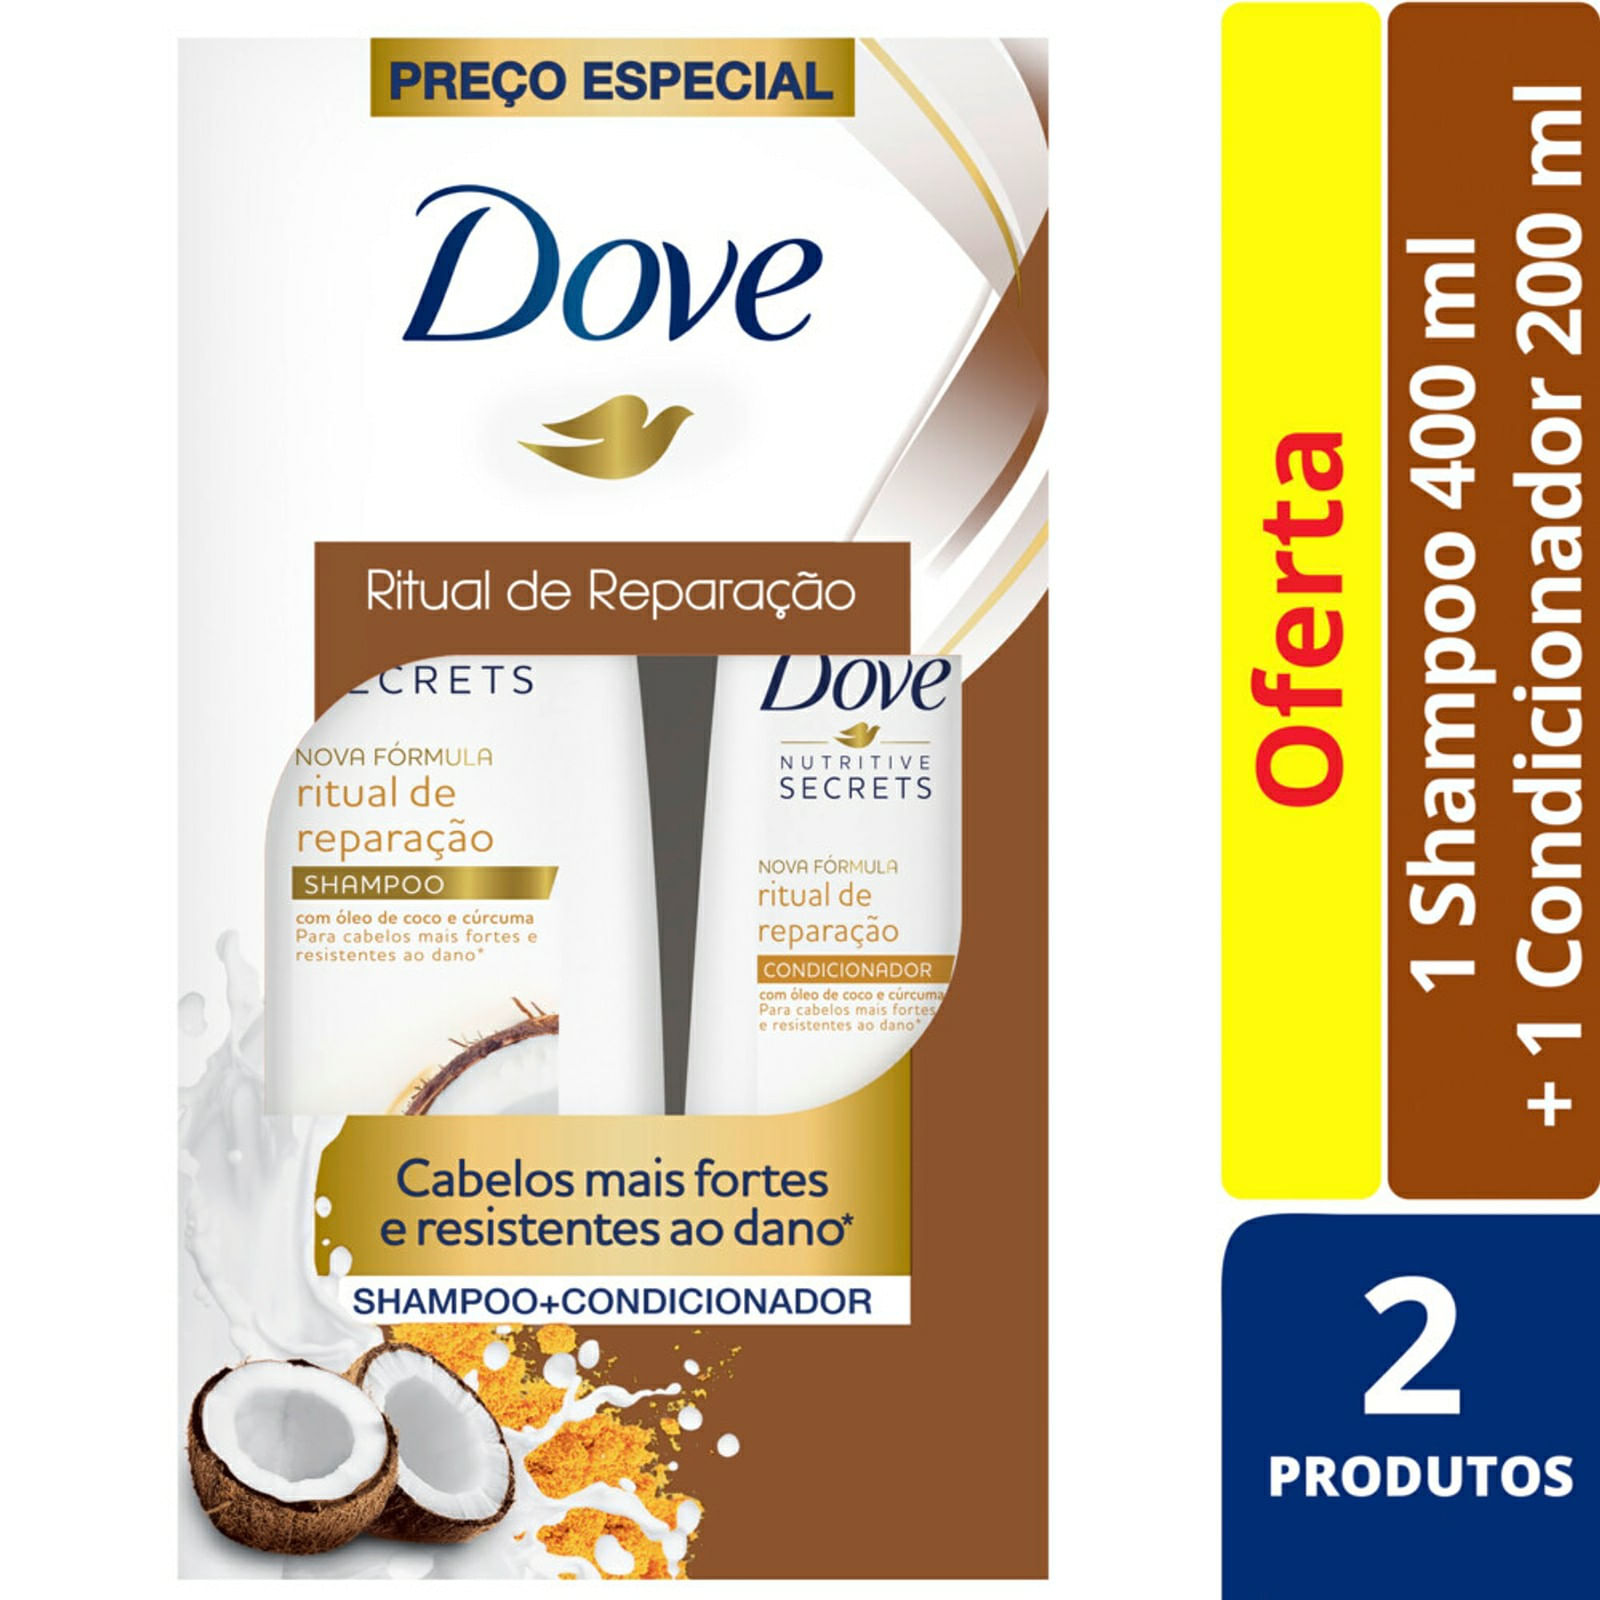 Shampoo Hidratante de Coco Secrets 300ml